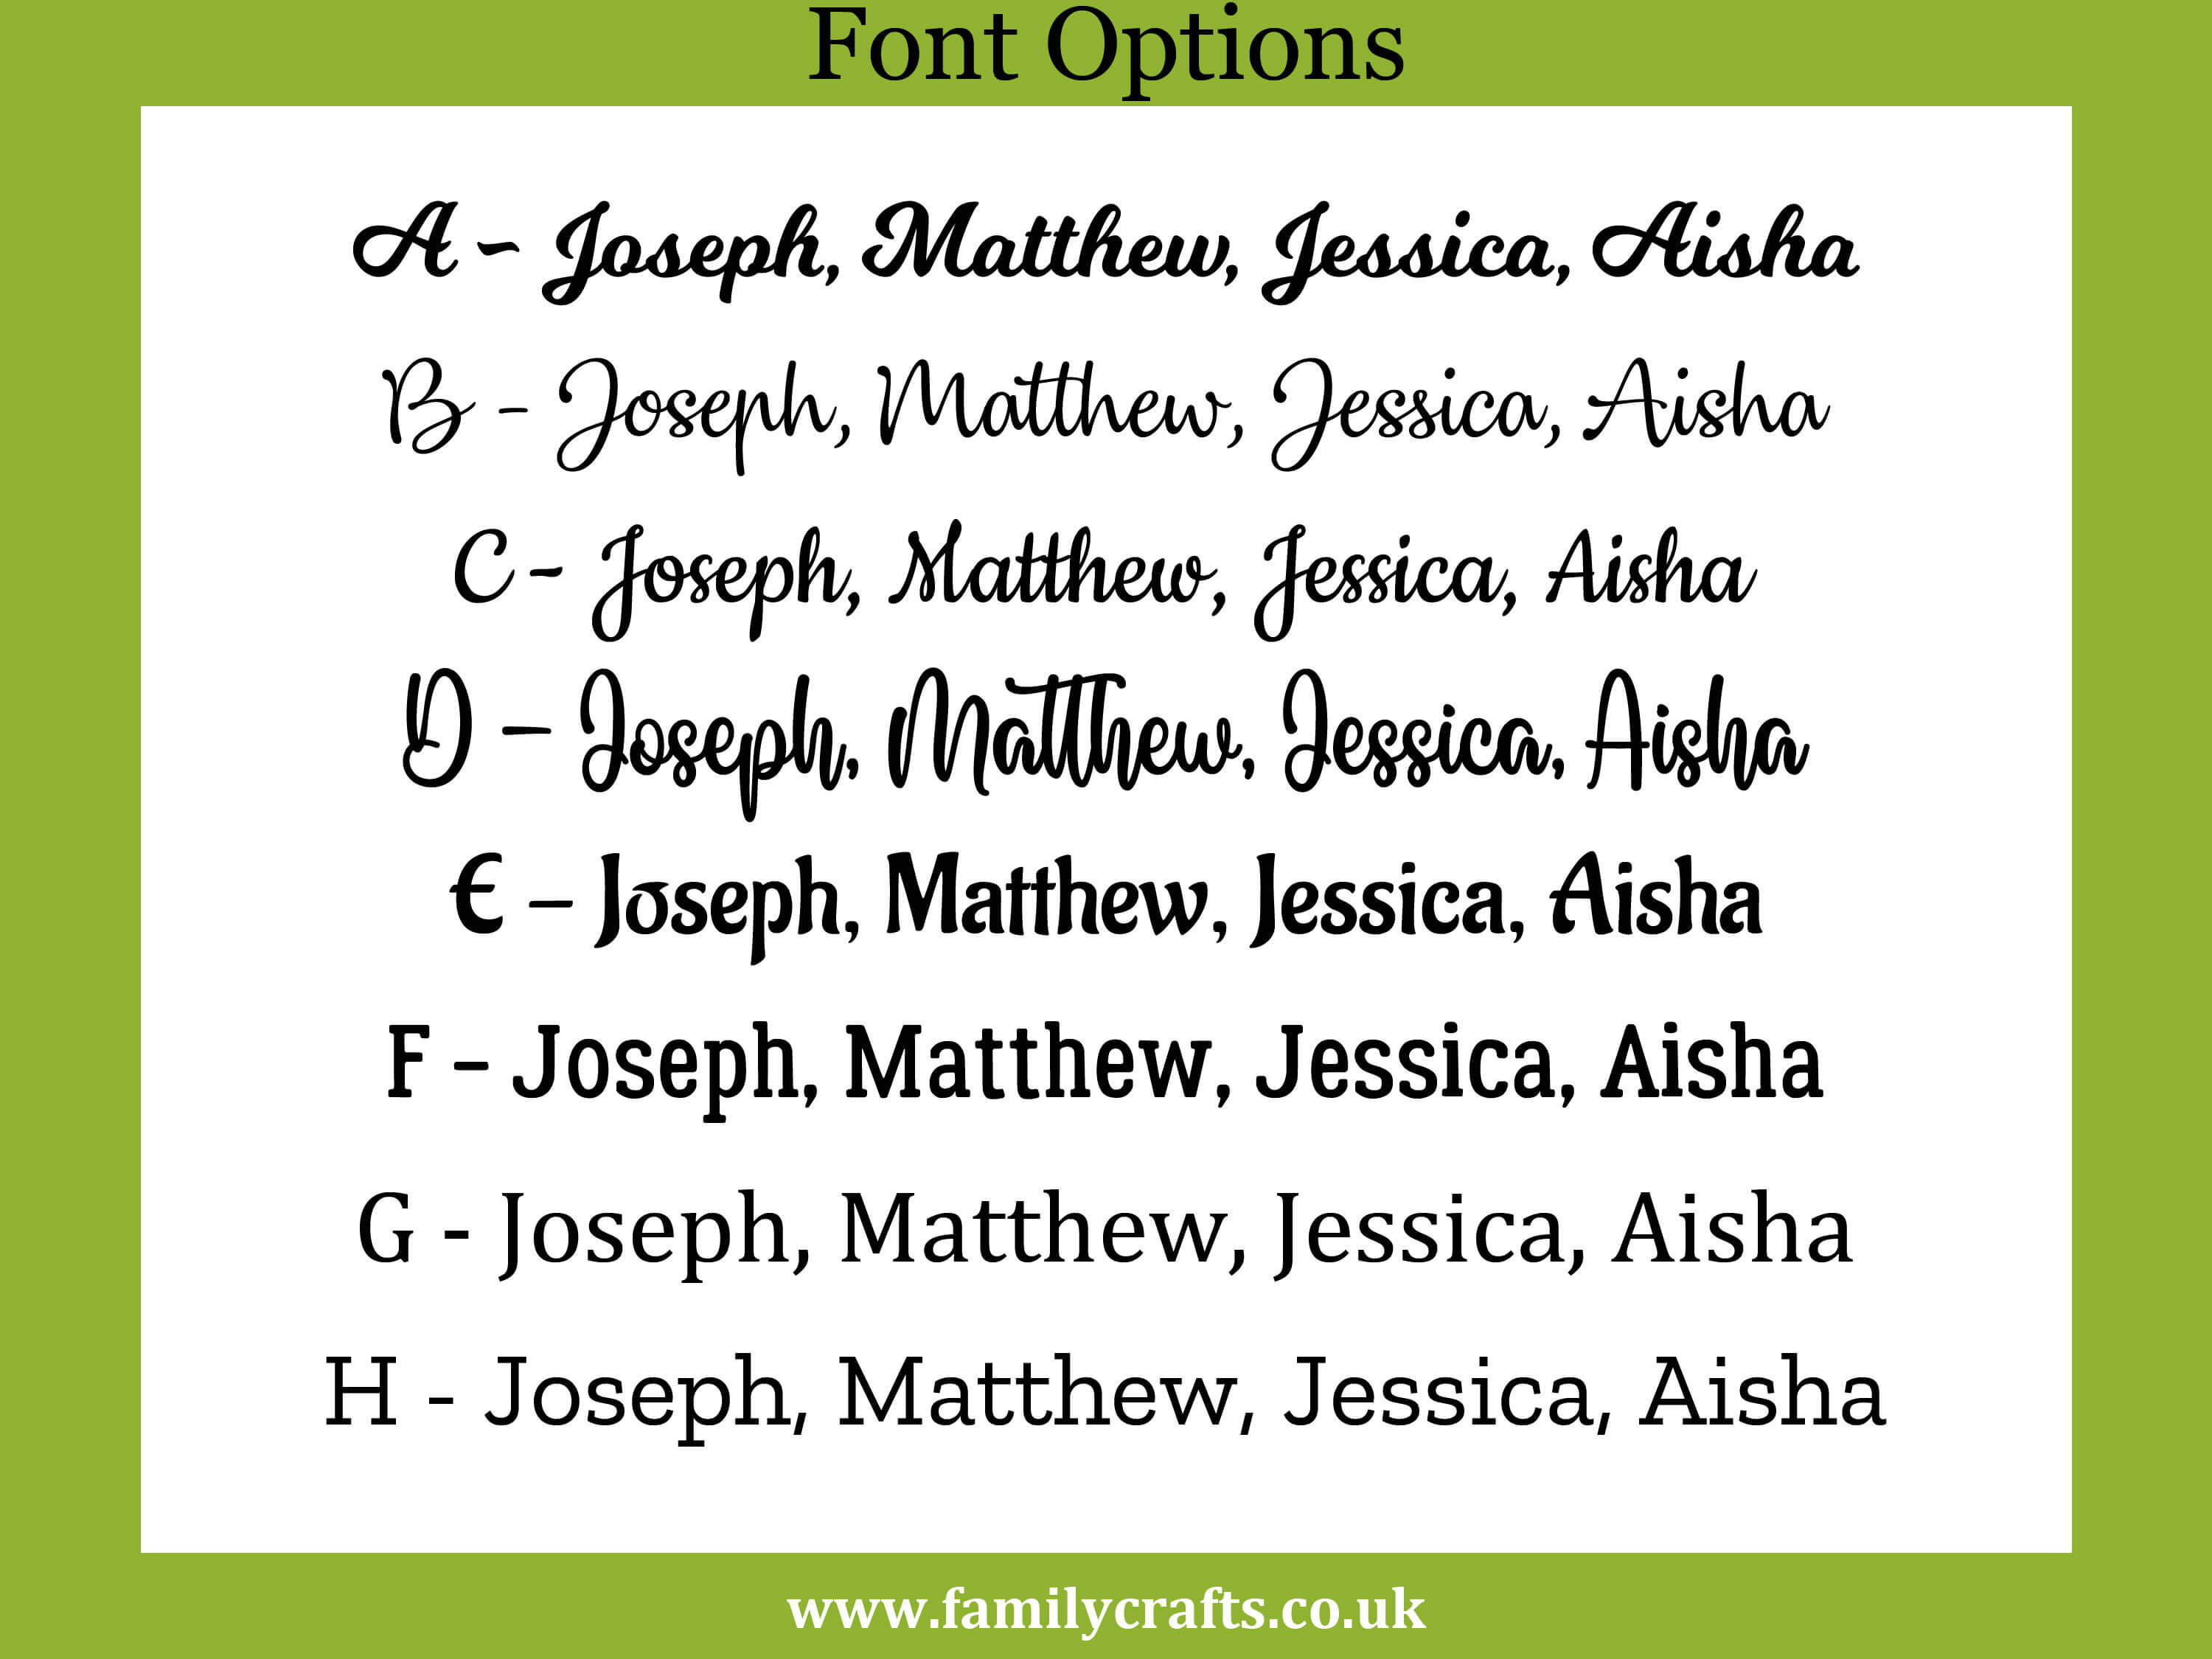 Acrylic Word Font Options